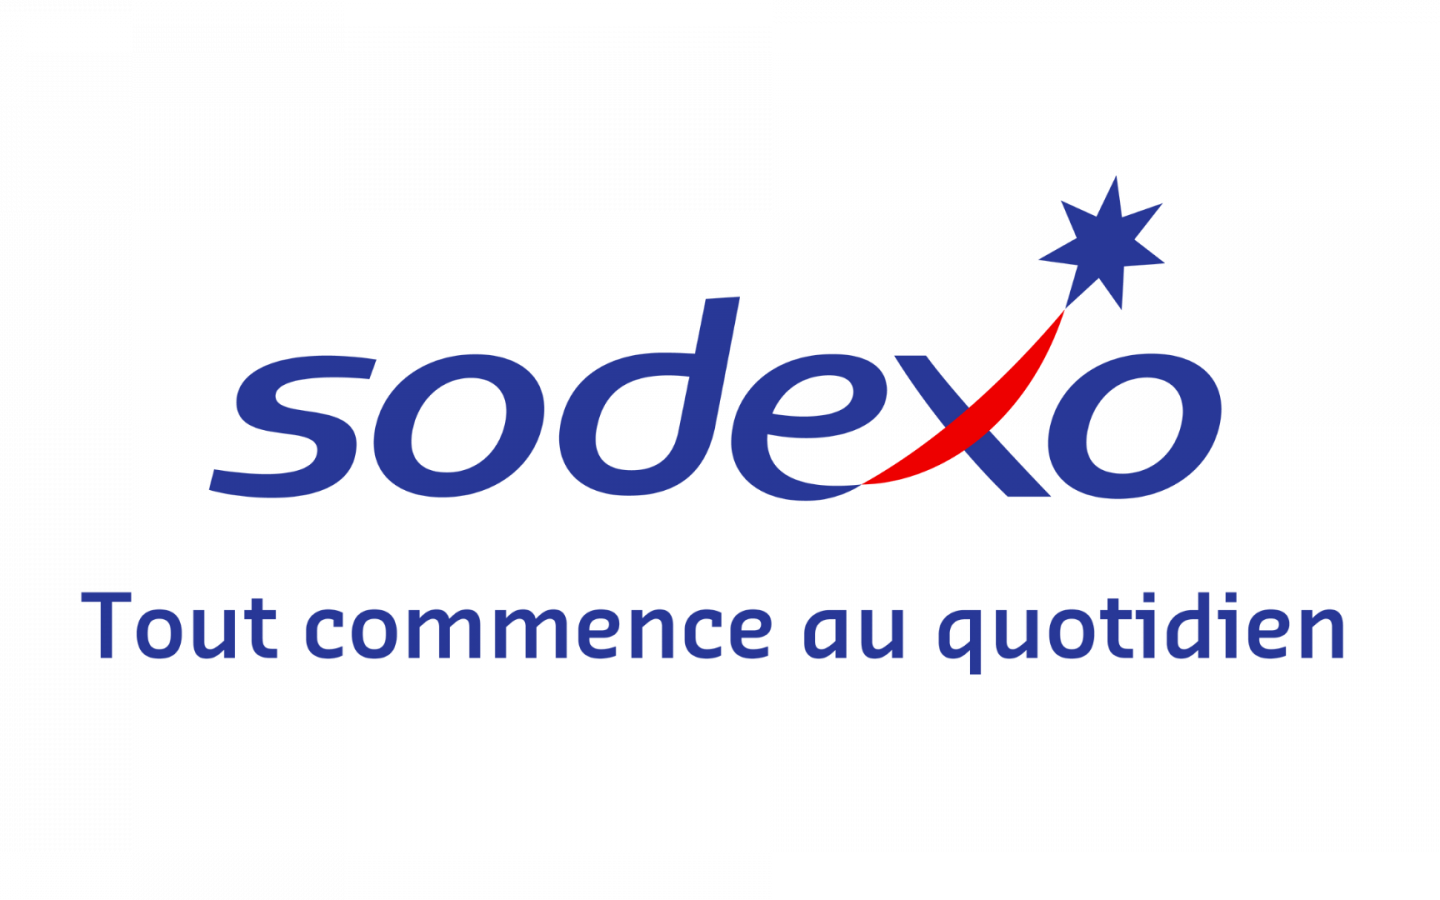 Logo Sodexo 1920x1080.png